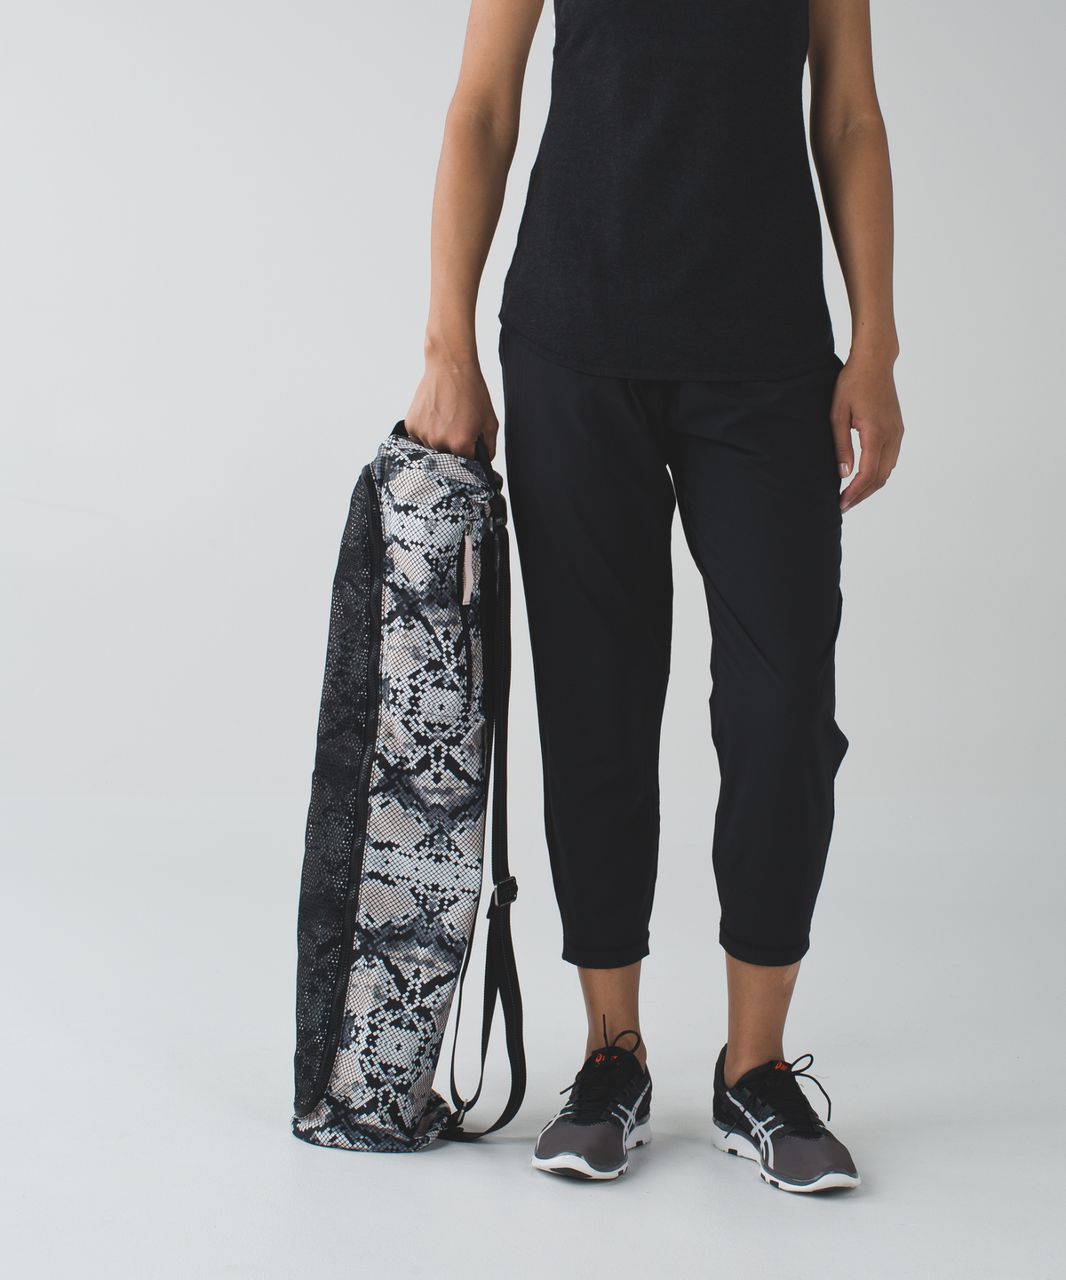 WHITE AS IVORY Yoga Mat Bag, Lightweight Tote Bag